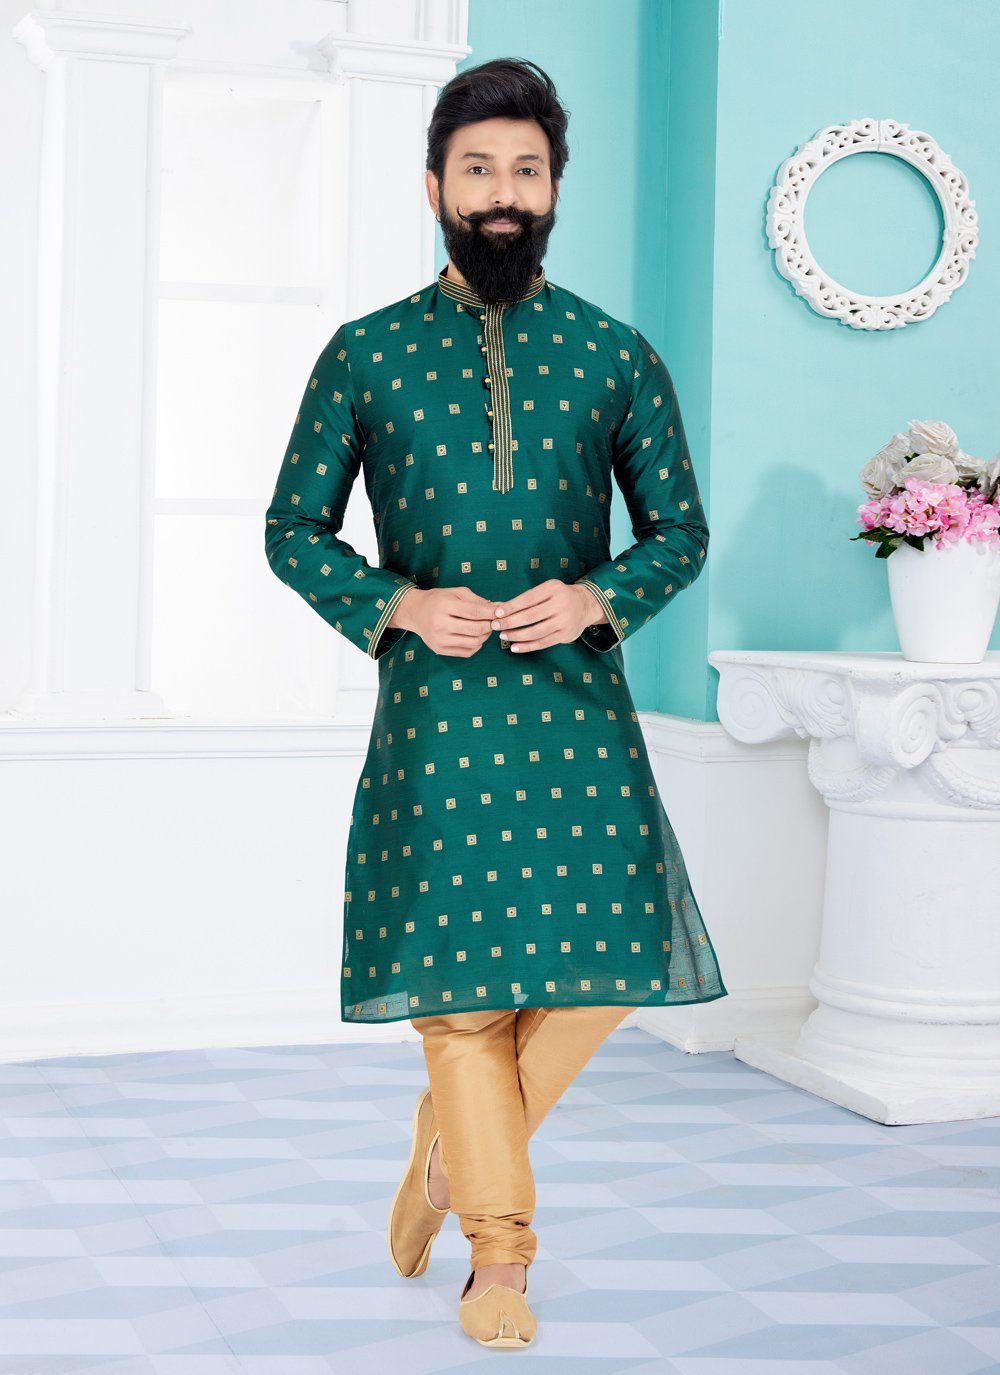 Kurta Pyjama Banarasi Silk Jacquard Green Jacquard Work Mens